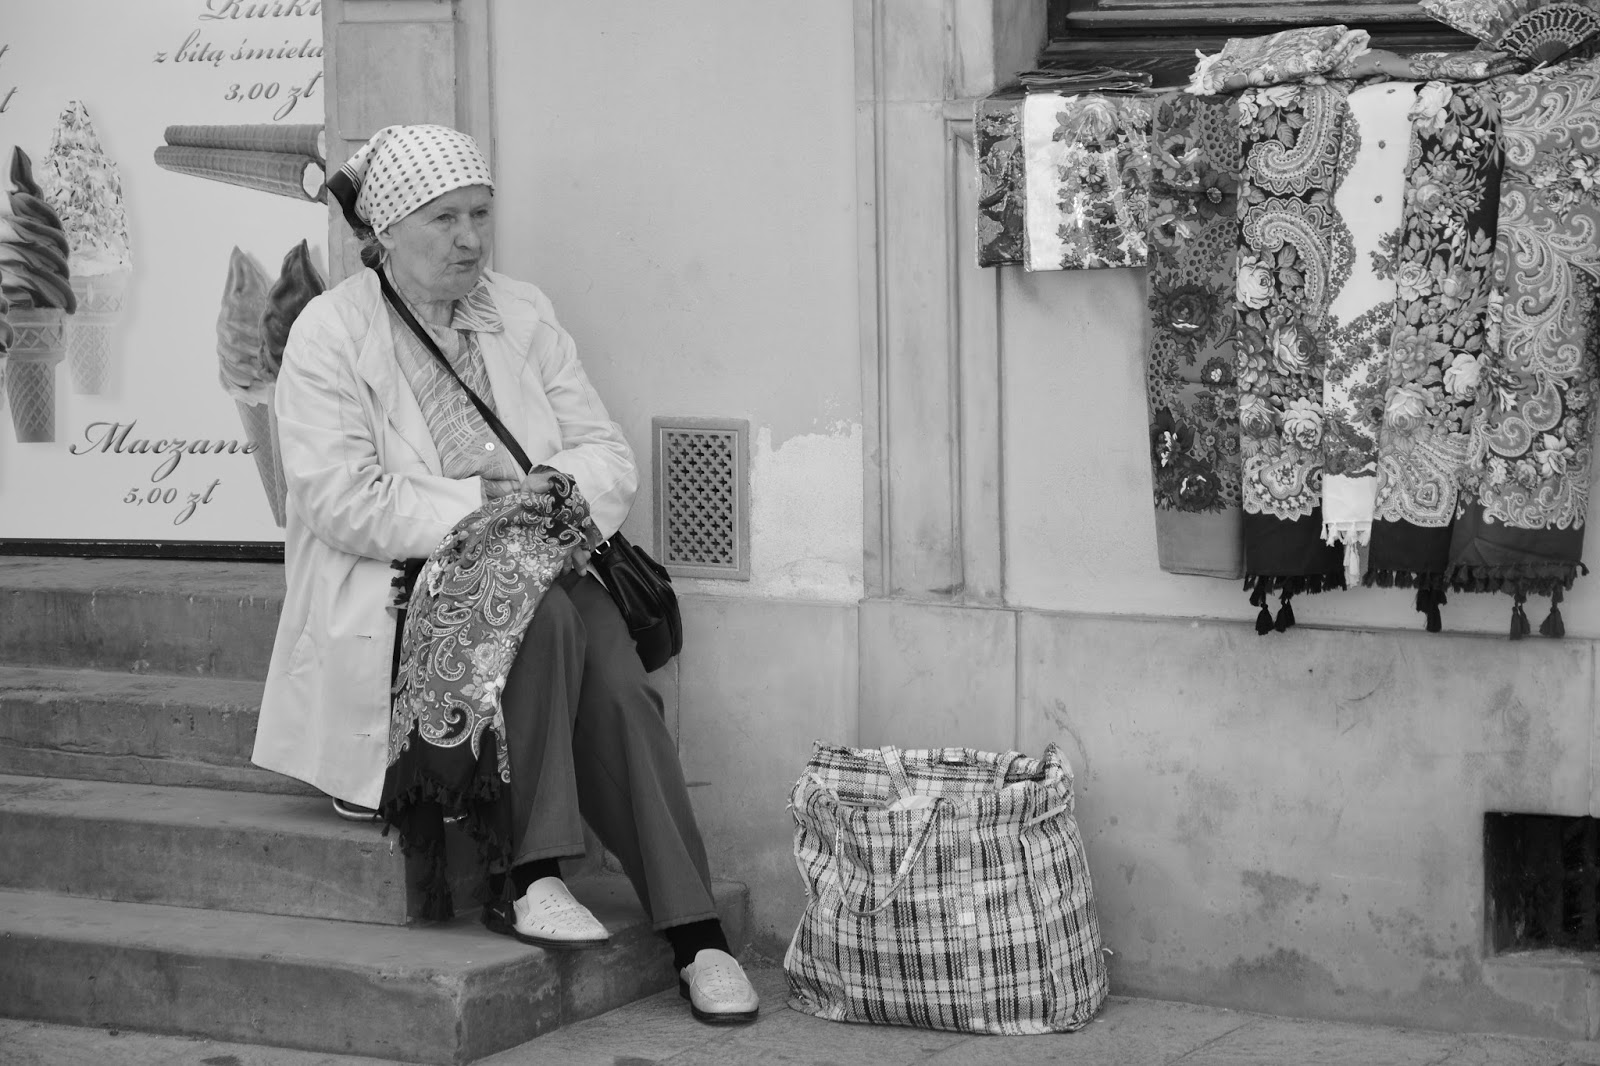 Woman knitting on shop step, Warsaw, Poland